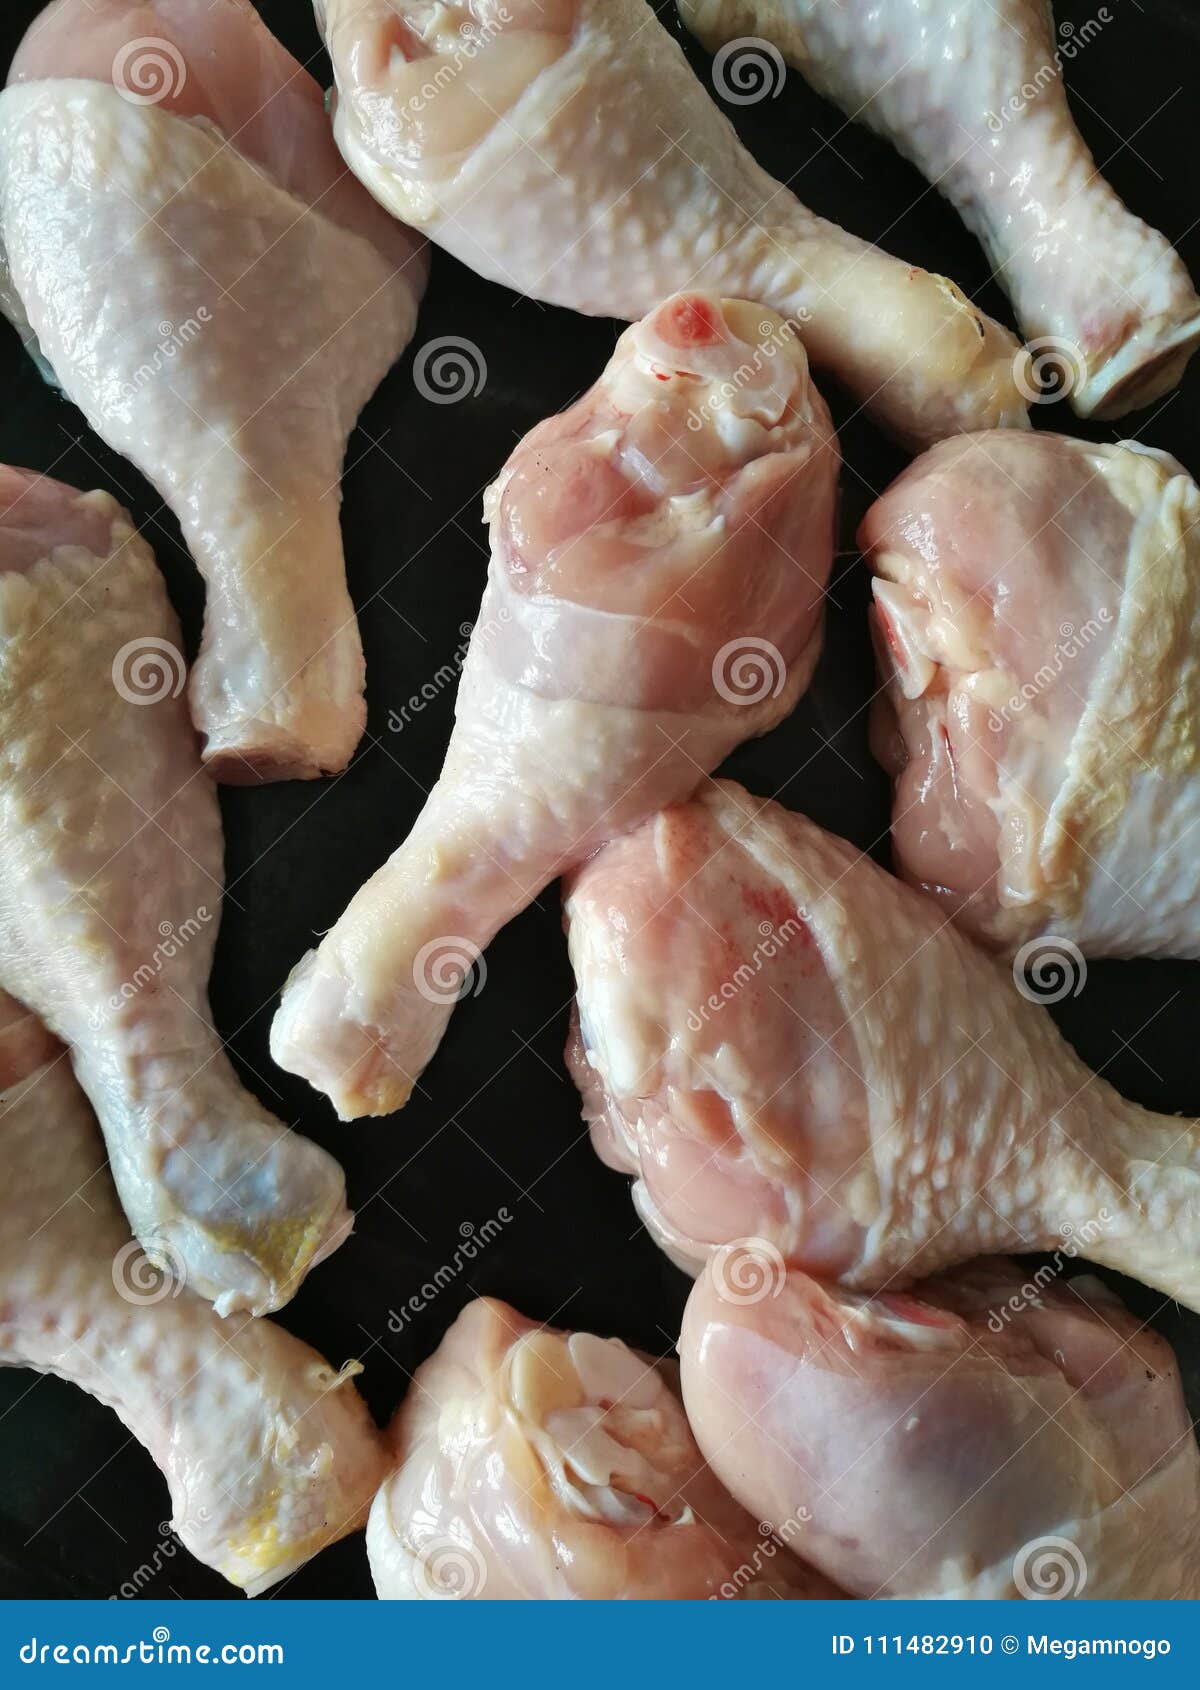 Raw Chicken Legs Stock Photo Image Of Skin Chicken 111482910